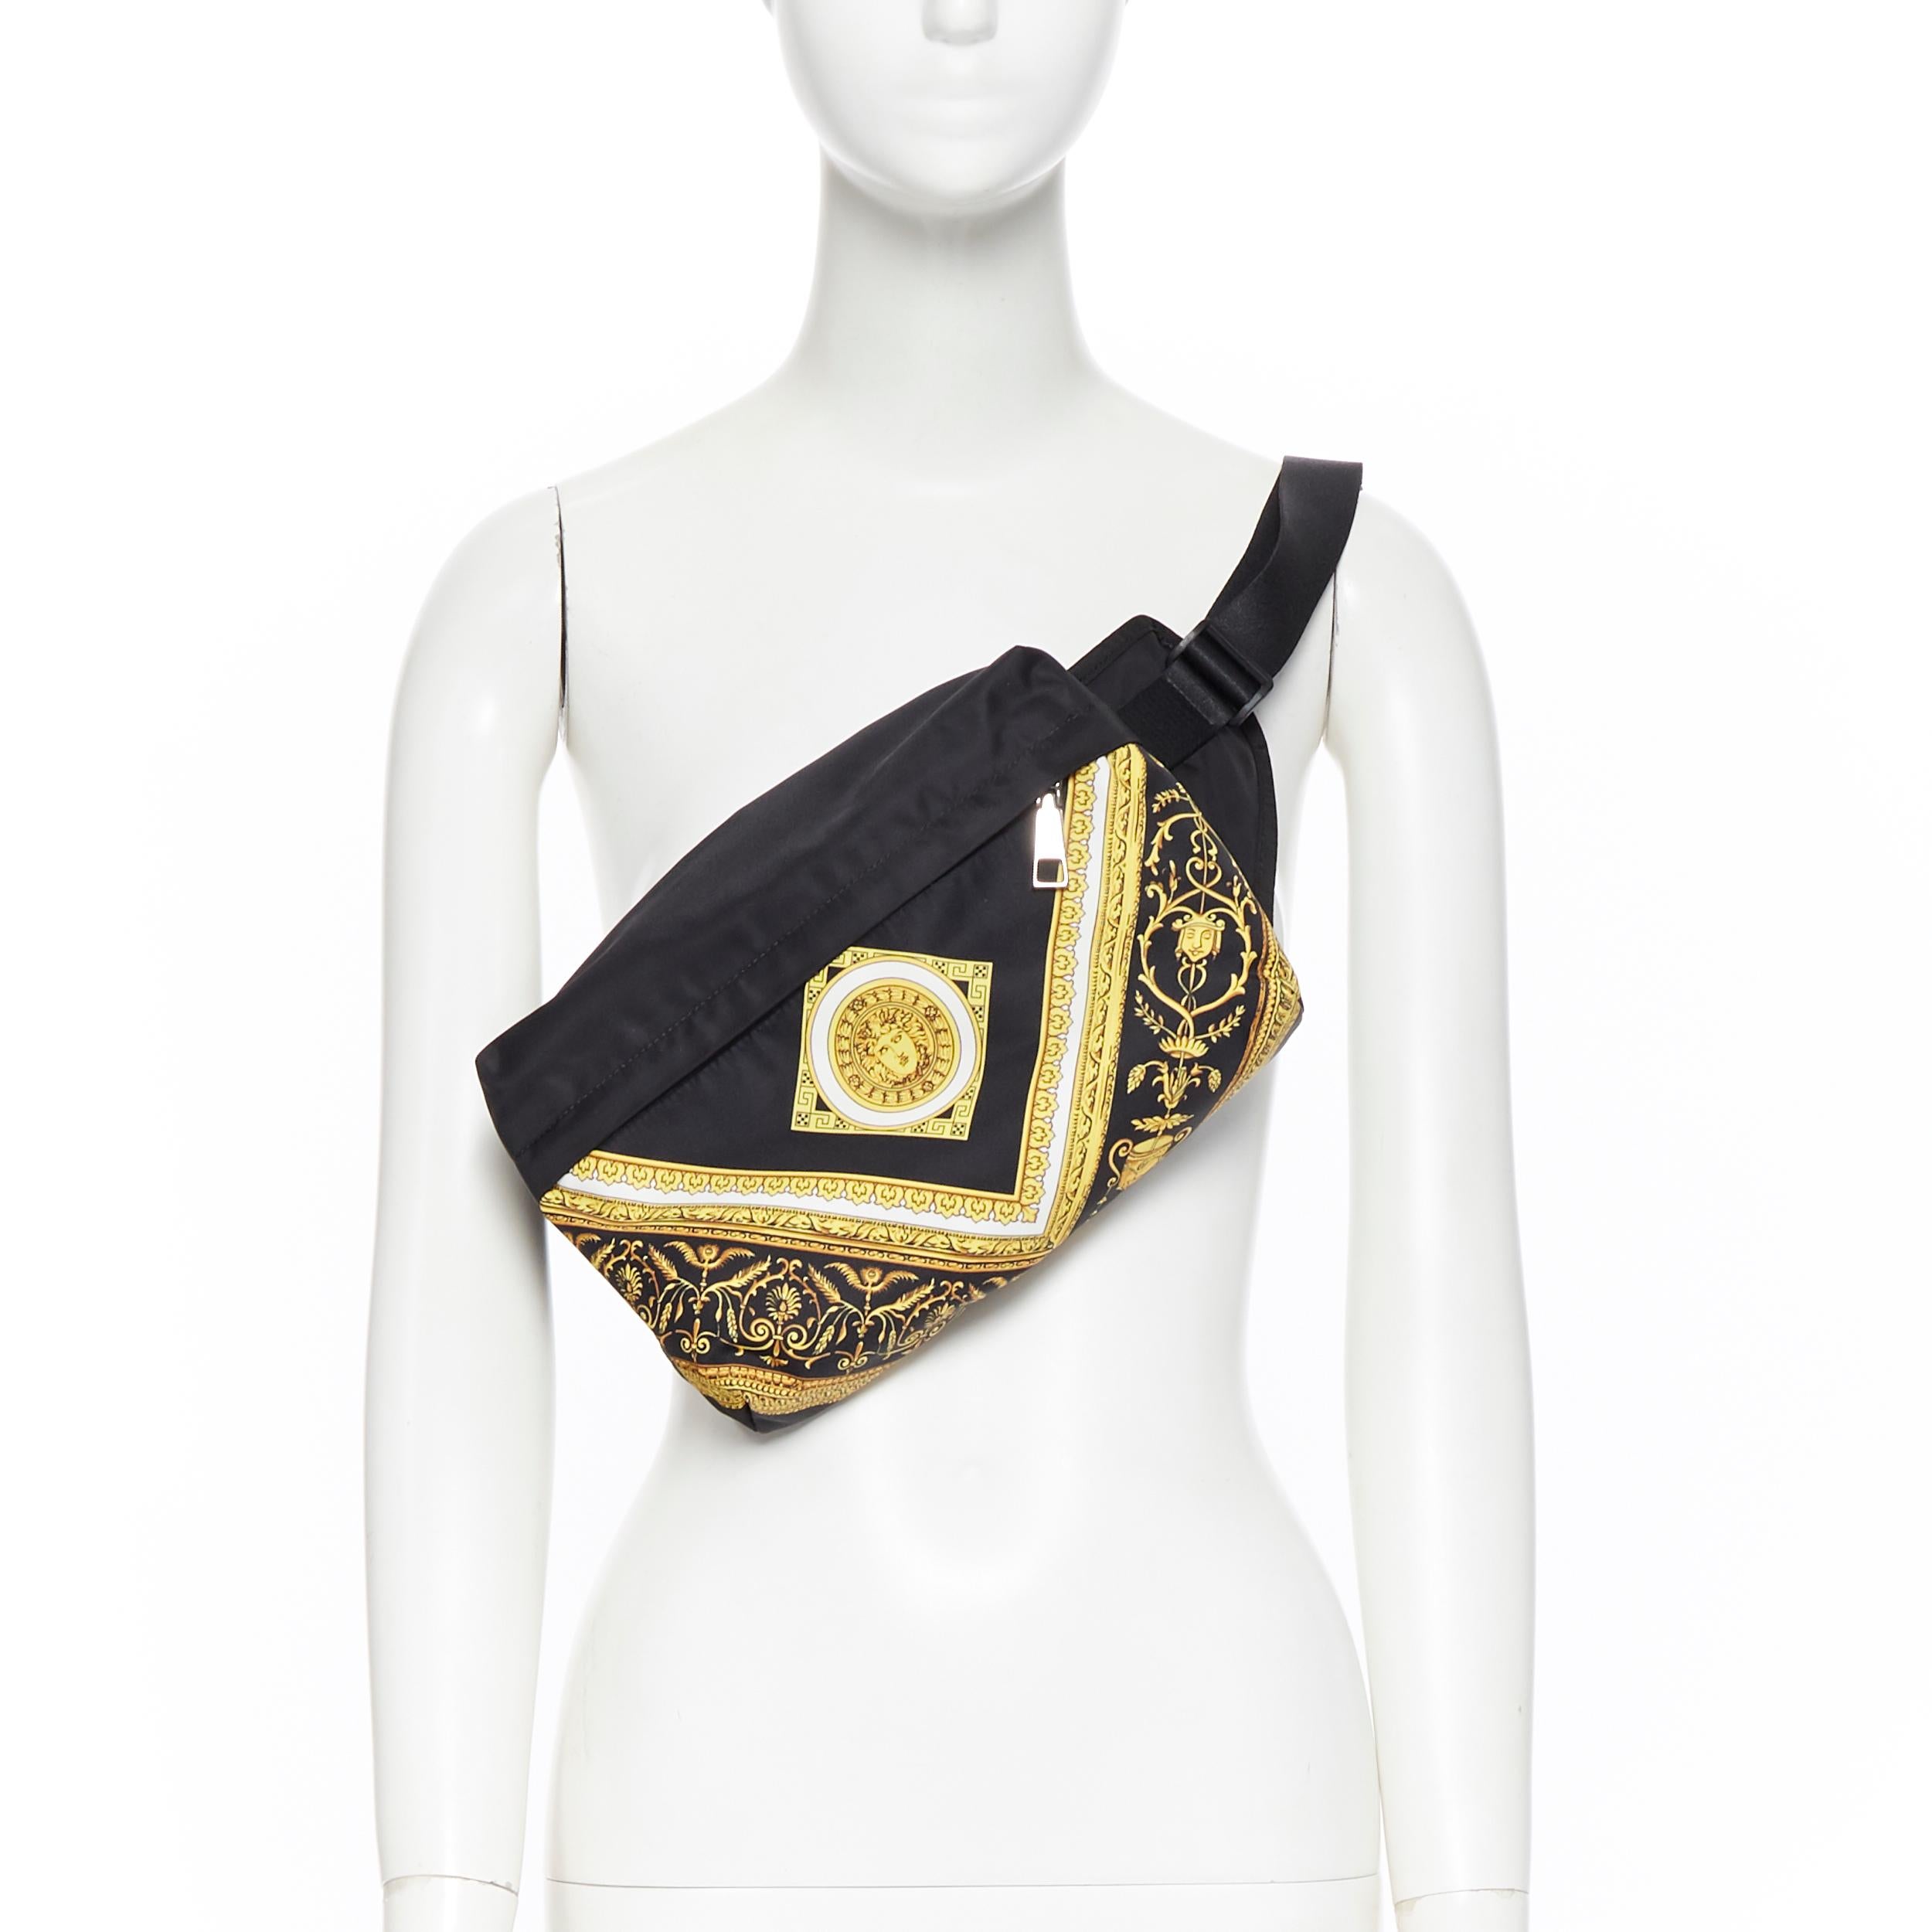 new VERSACE black gold baroque Medusa printed nylon zip front waist fanny bag
Brand: Versace
Designer: Donatella Versace
Collection: 2019
Model Name / Style: Belt bag
Material: Nylon
Color: Black
Pattern: Other
Closure: Zip
Lining material: